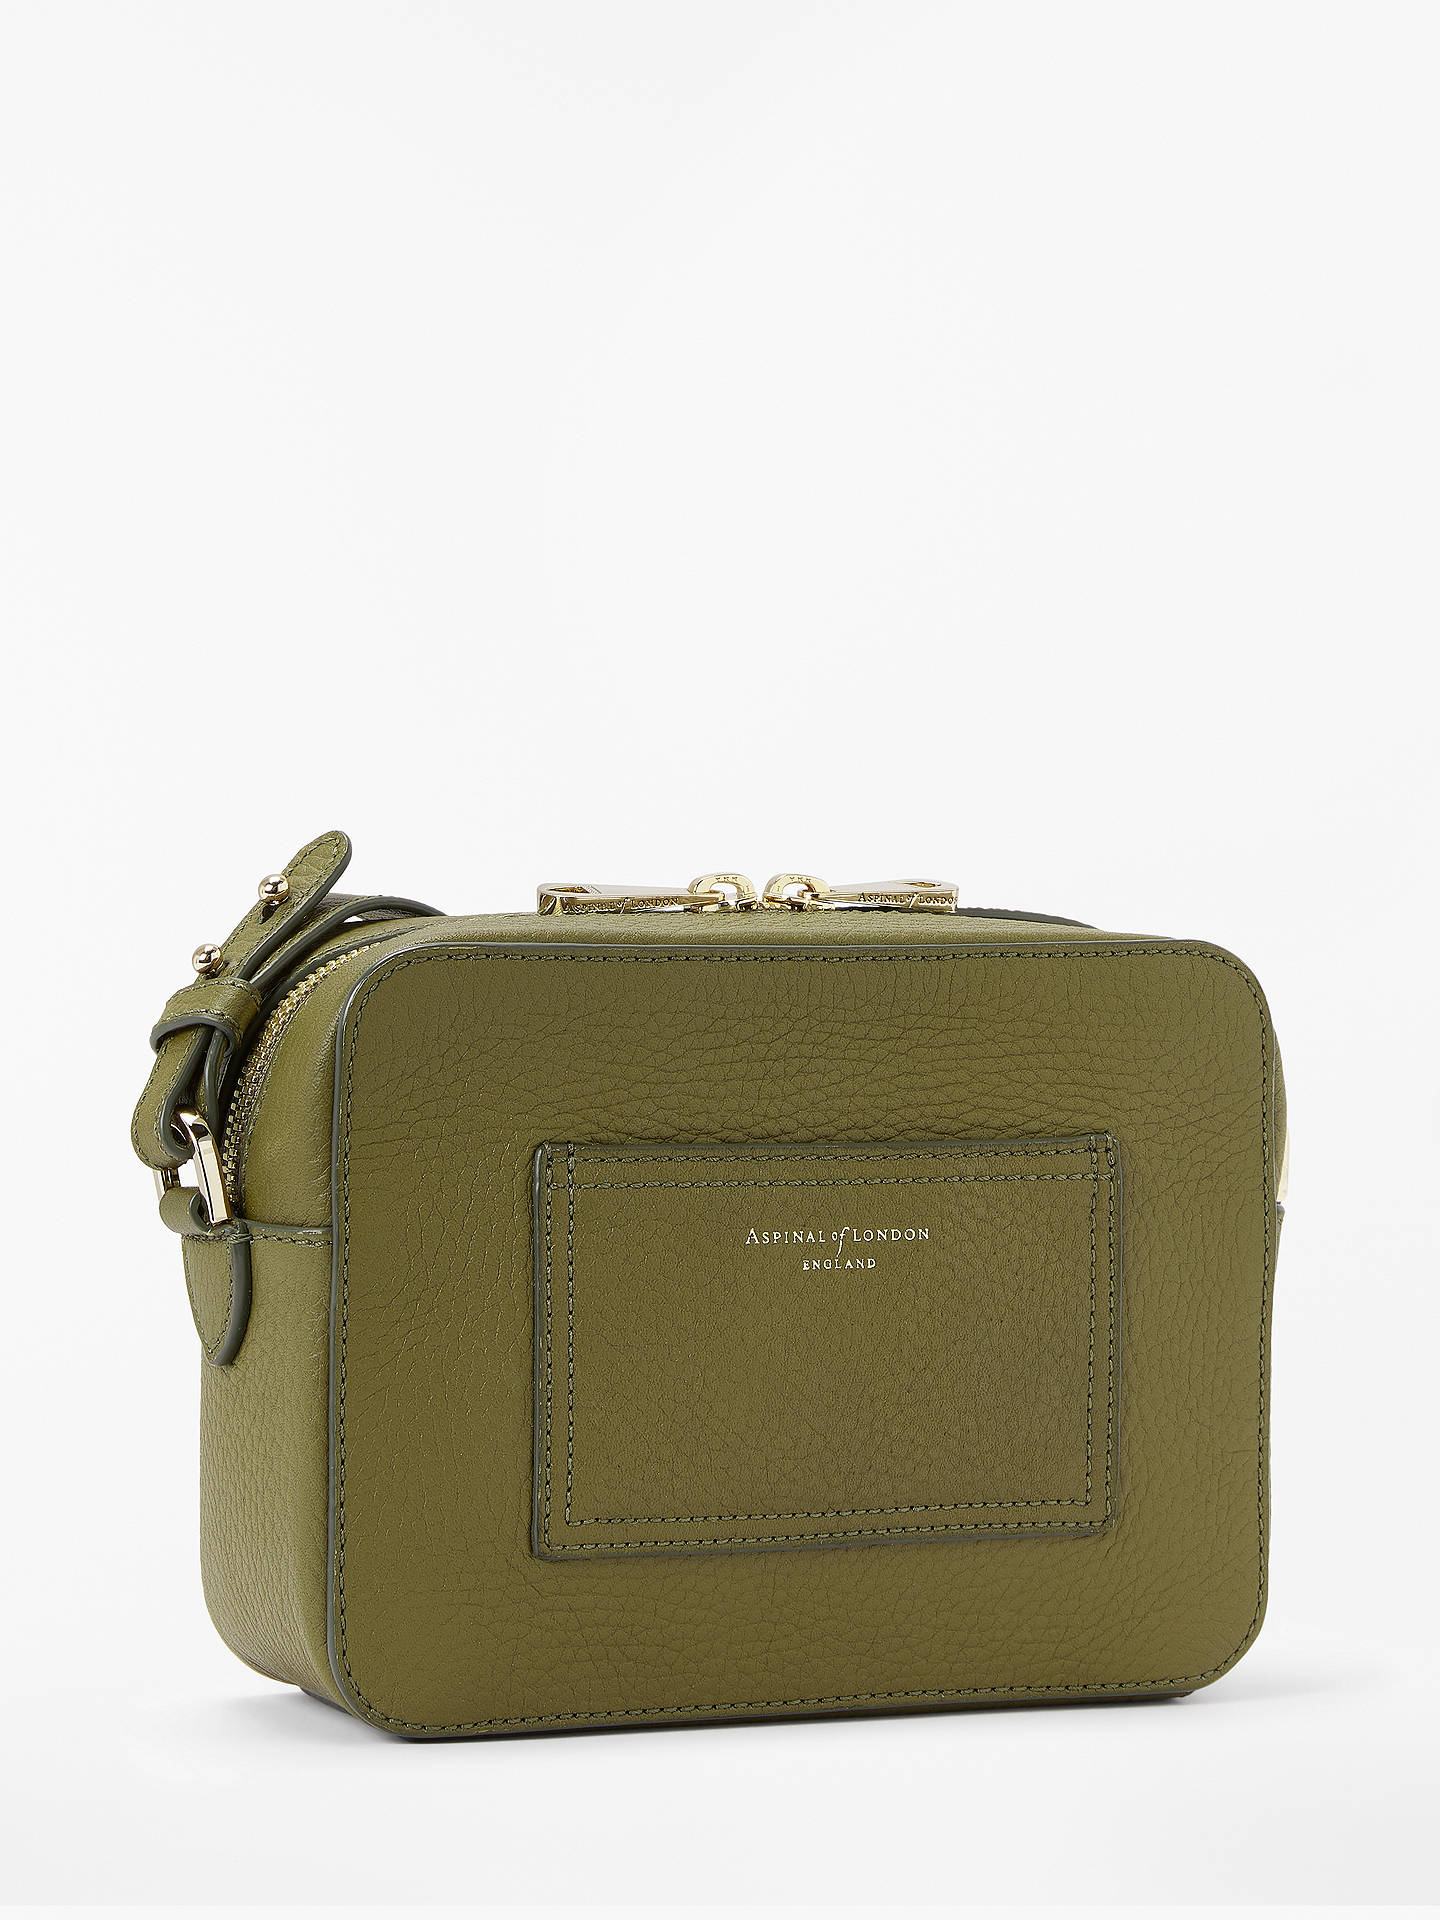 Aspinal Handbags John Lewis | semashow.com